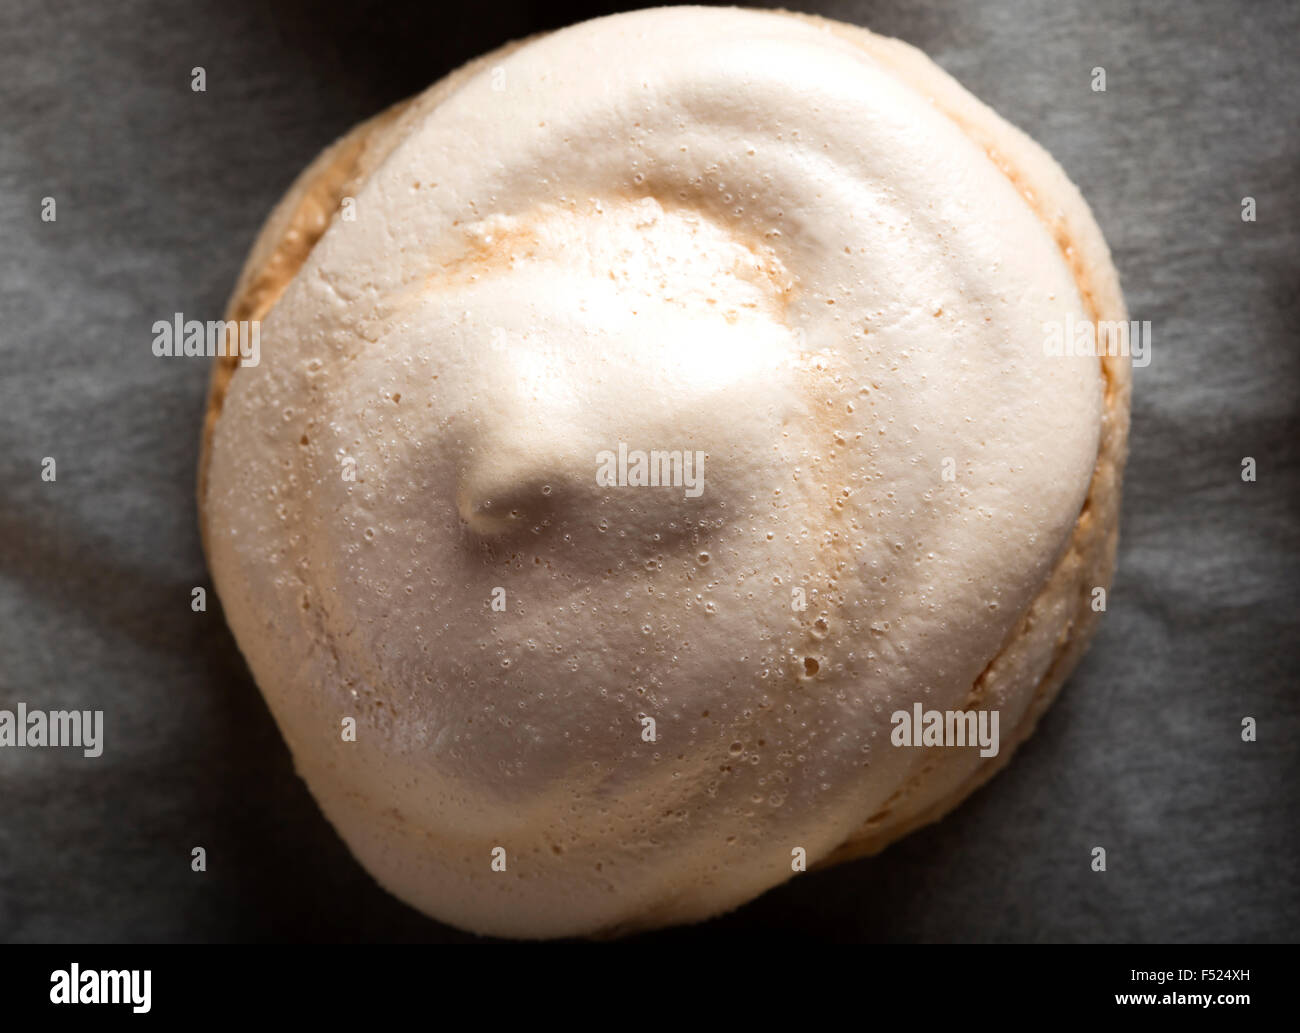 Cotta meringa bianca sul vassoio da forno Foto Stock